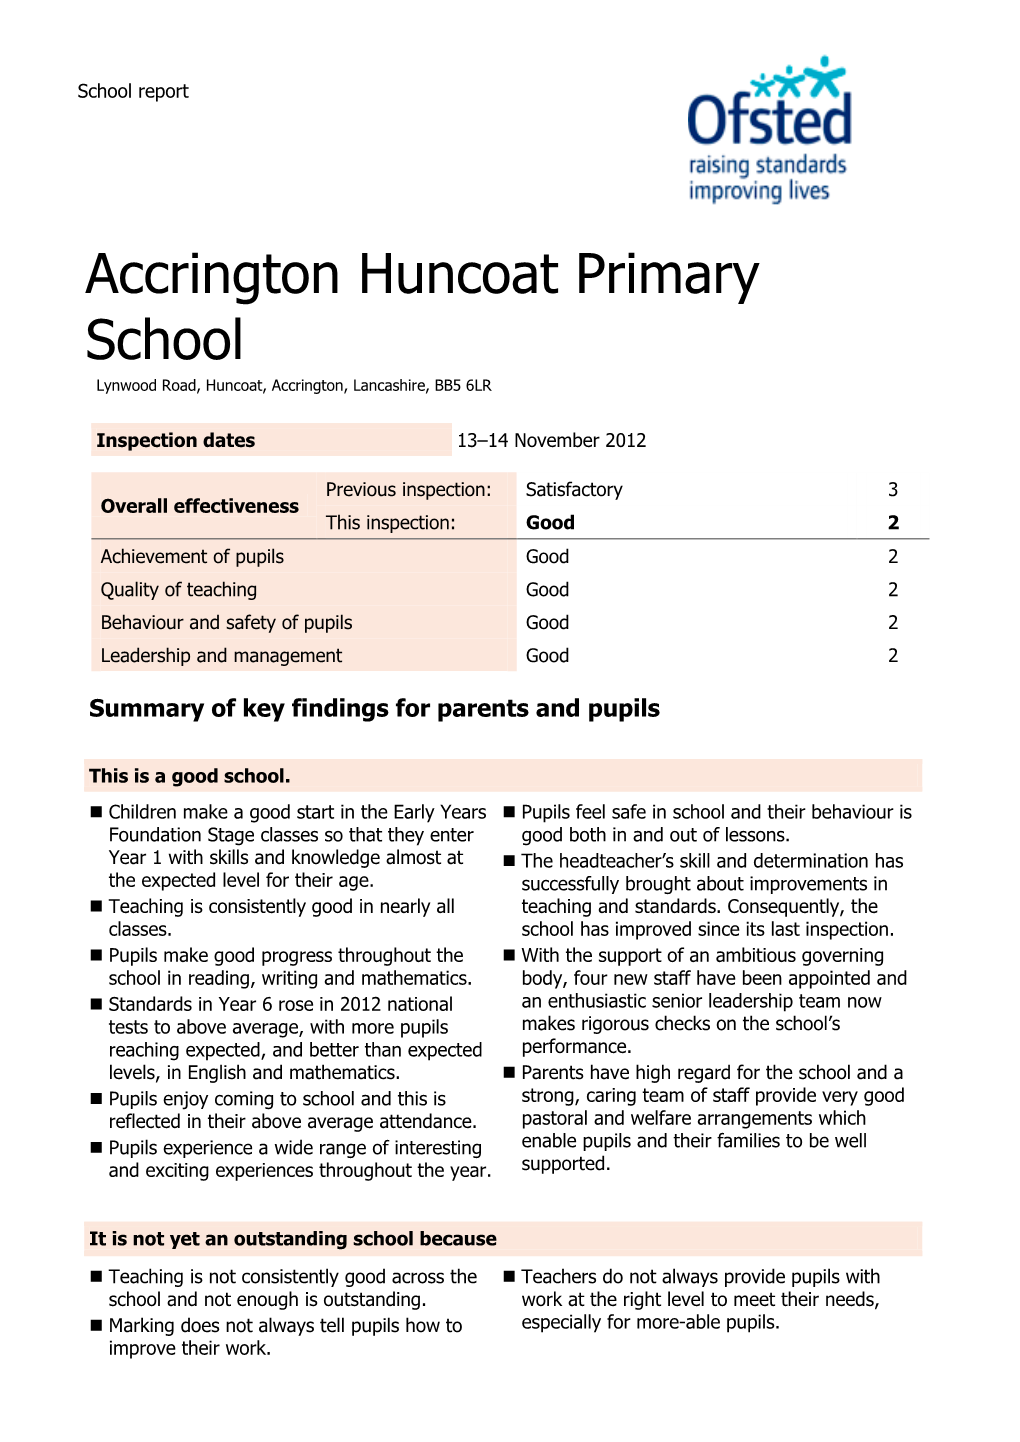 Accrington Huncoat Primary School Lynwood Road, Huncoat, Accrington, Lancashire, BB5 6LR